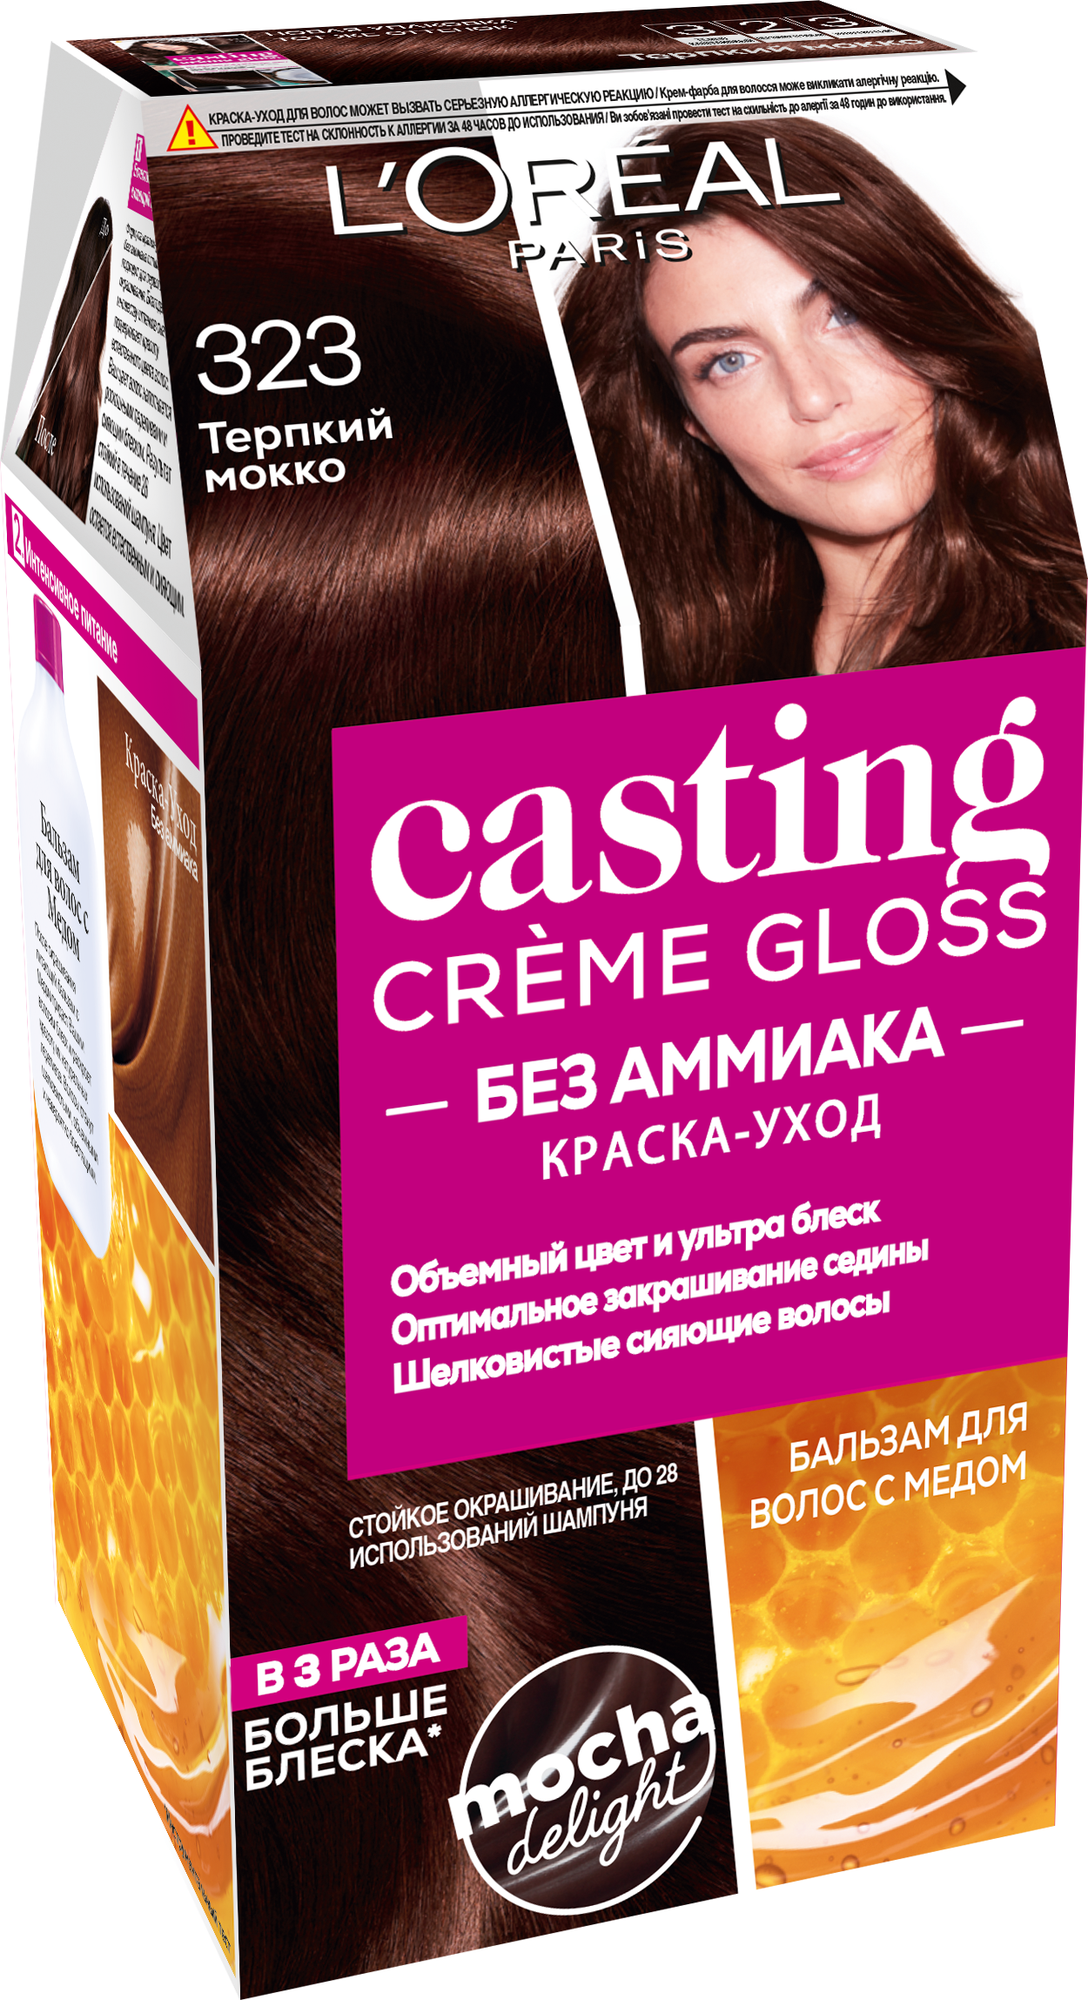 L'Oreal Paris Стойкая краска-уход для волос "Casting Creme Gloss" без аммиака, оттенок 323, Терпкий Мокко 180 мл